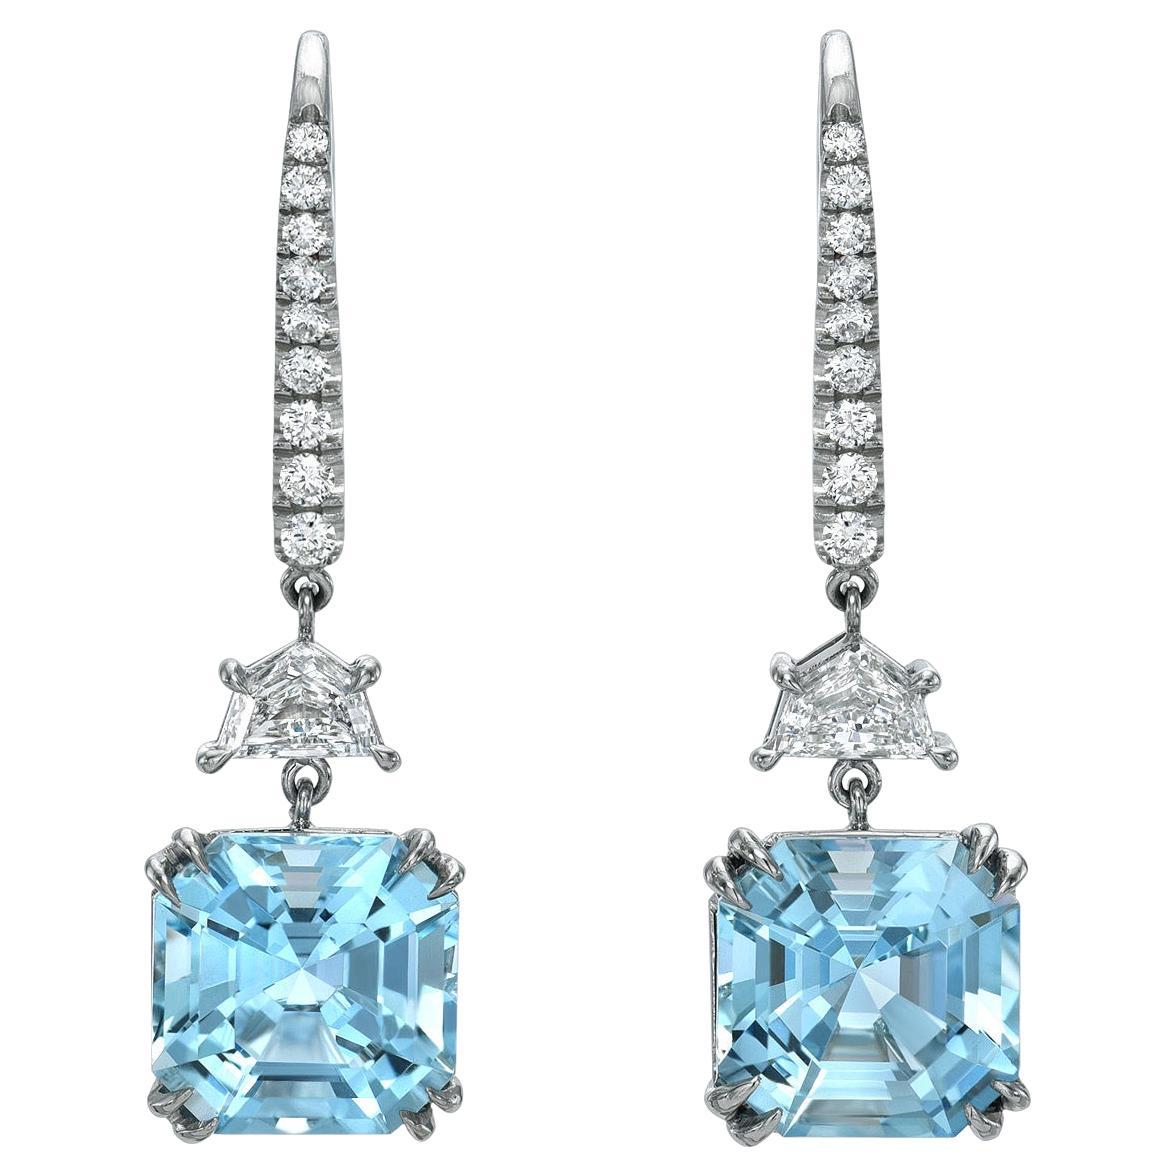 Aquamarine Earrings Square Emerald Cut 4.83 Carats